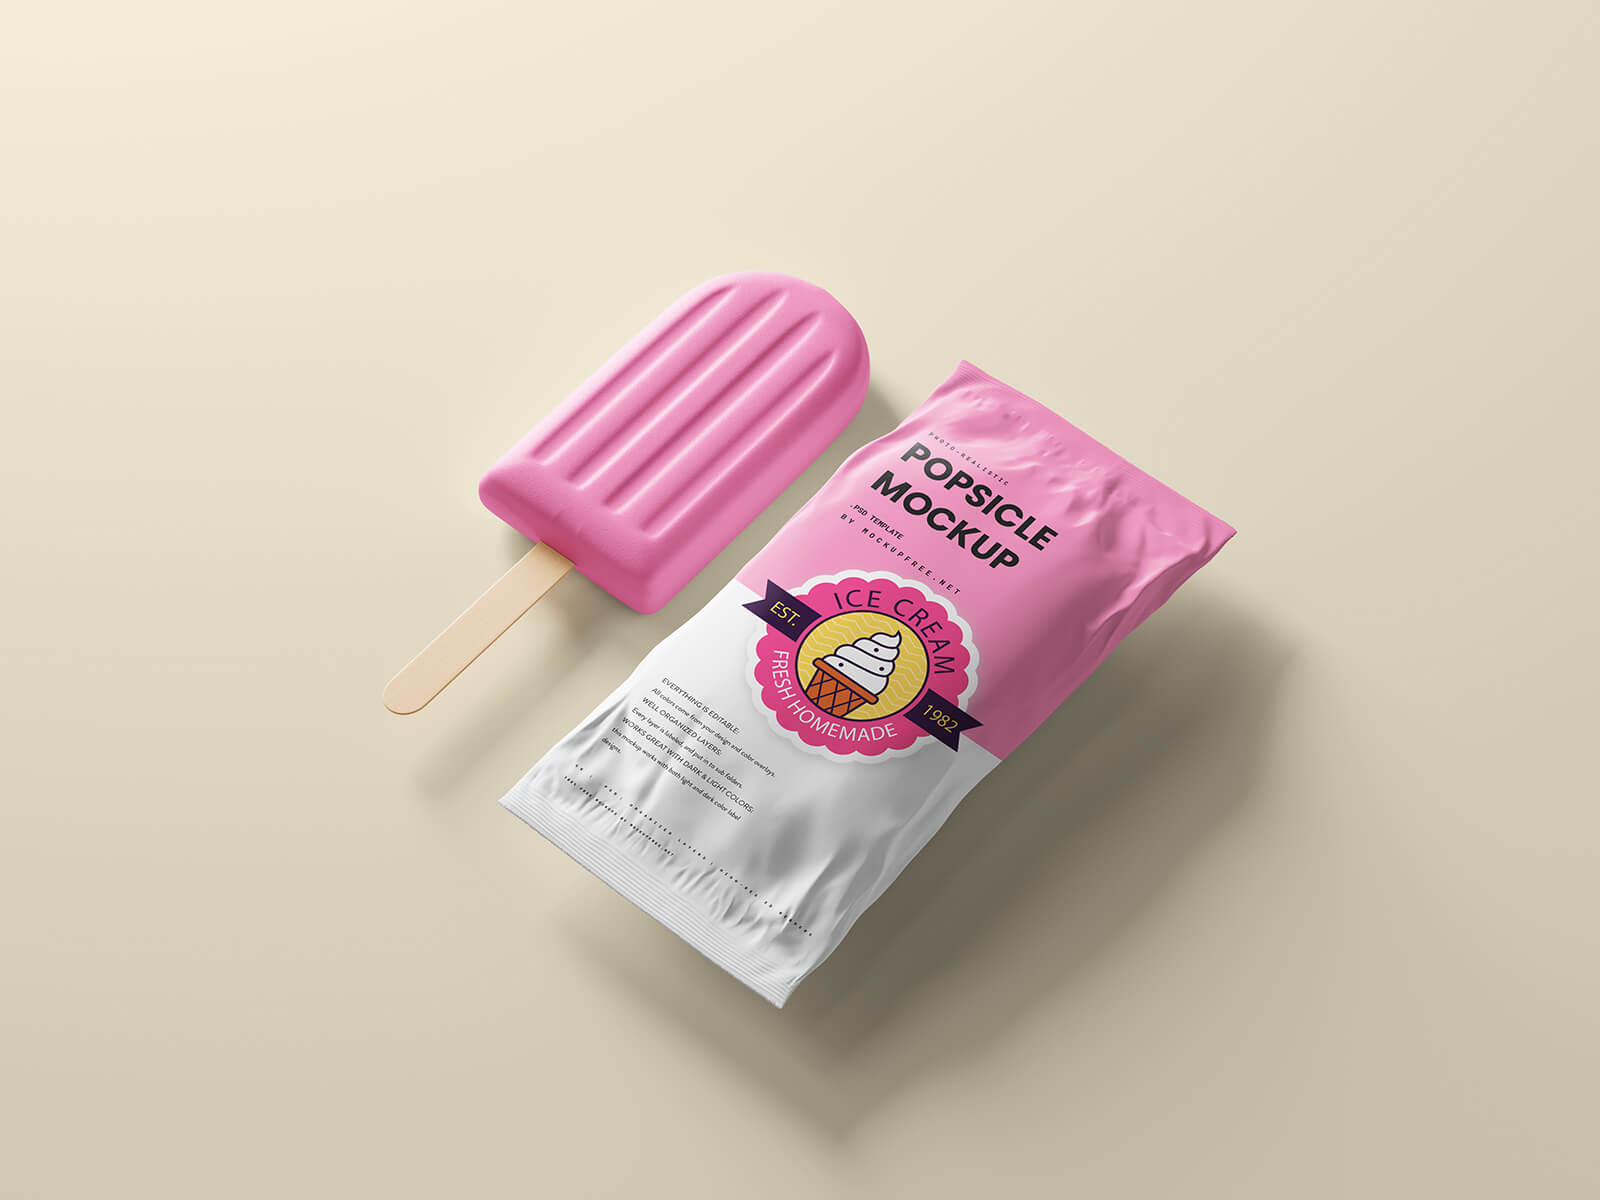 10 Free Popsicle Ice Cream Mockup PSD Files